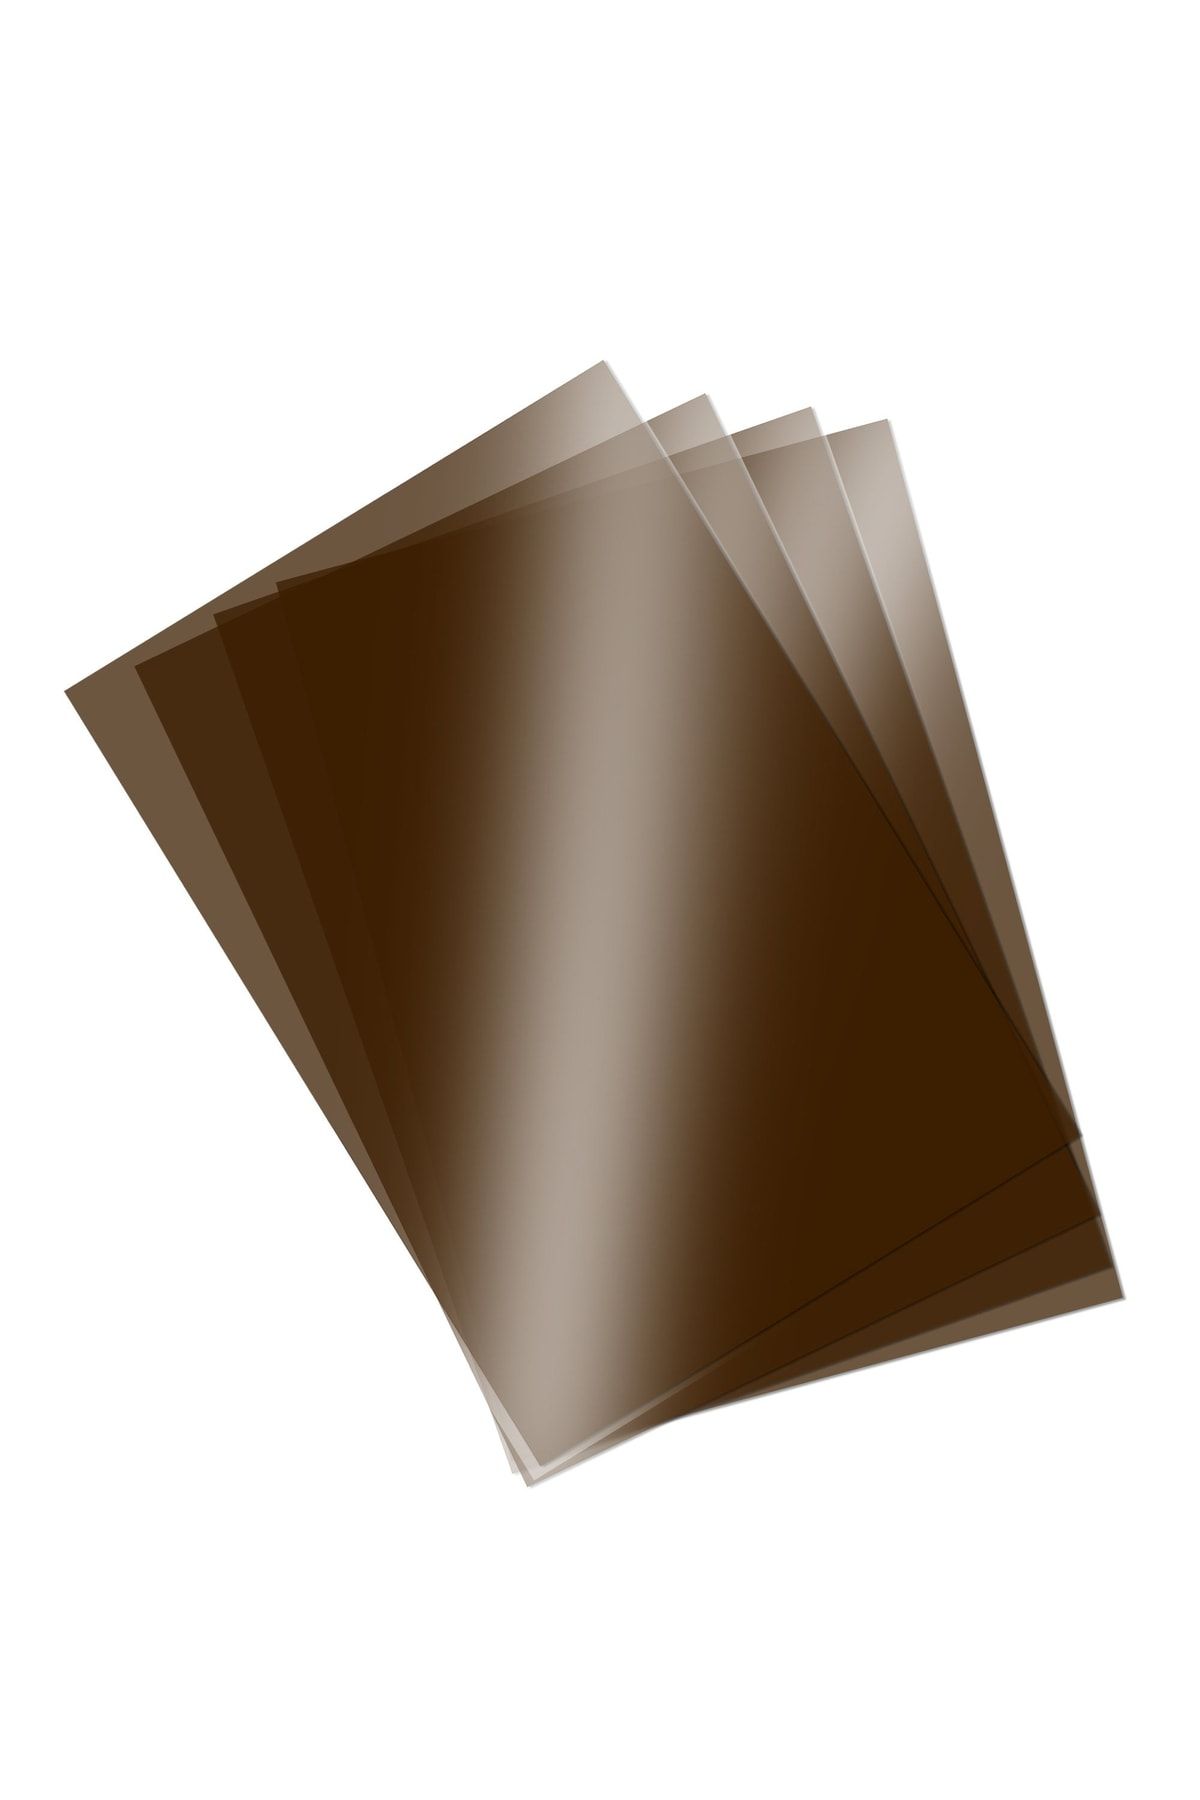 Ümraniye Hobi Sanat Renkli Asetat Kağıdı Pvc 250 Micron A4 Kahverengi 5'li